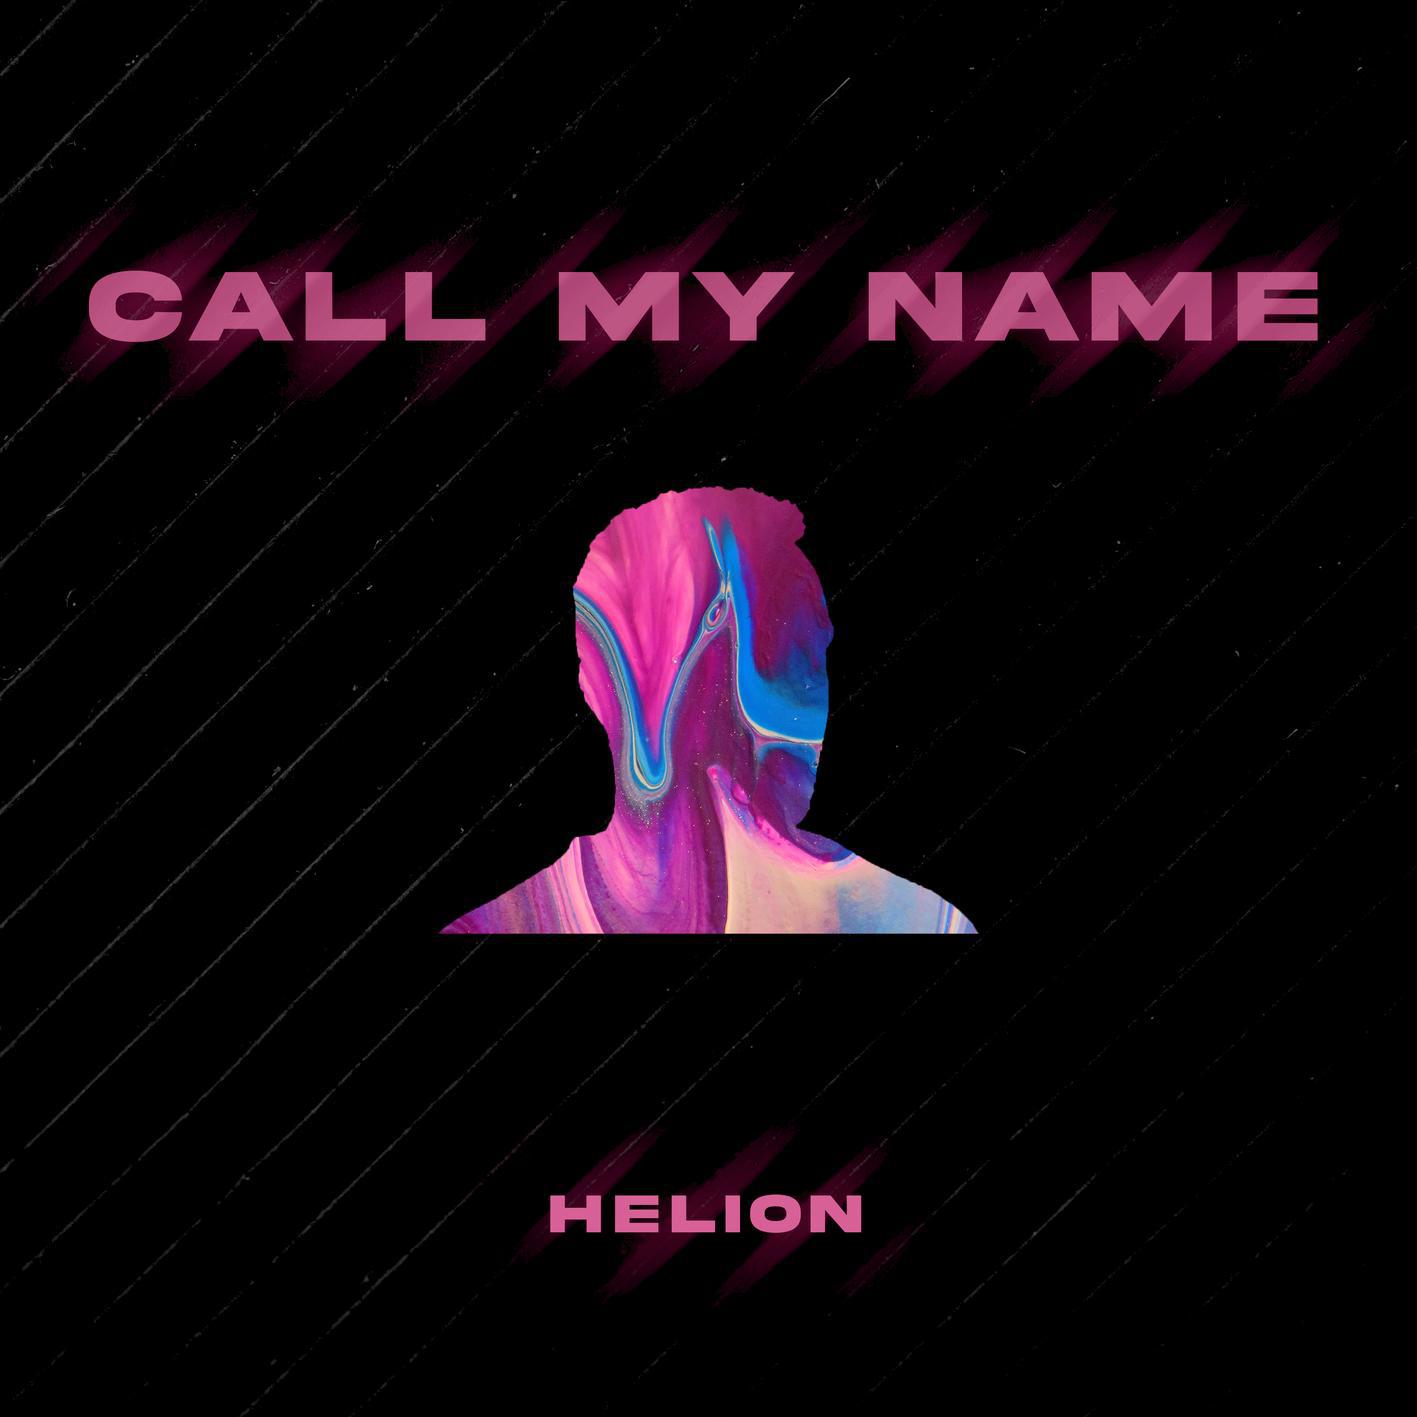 Helion - Call My Name